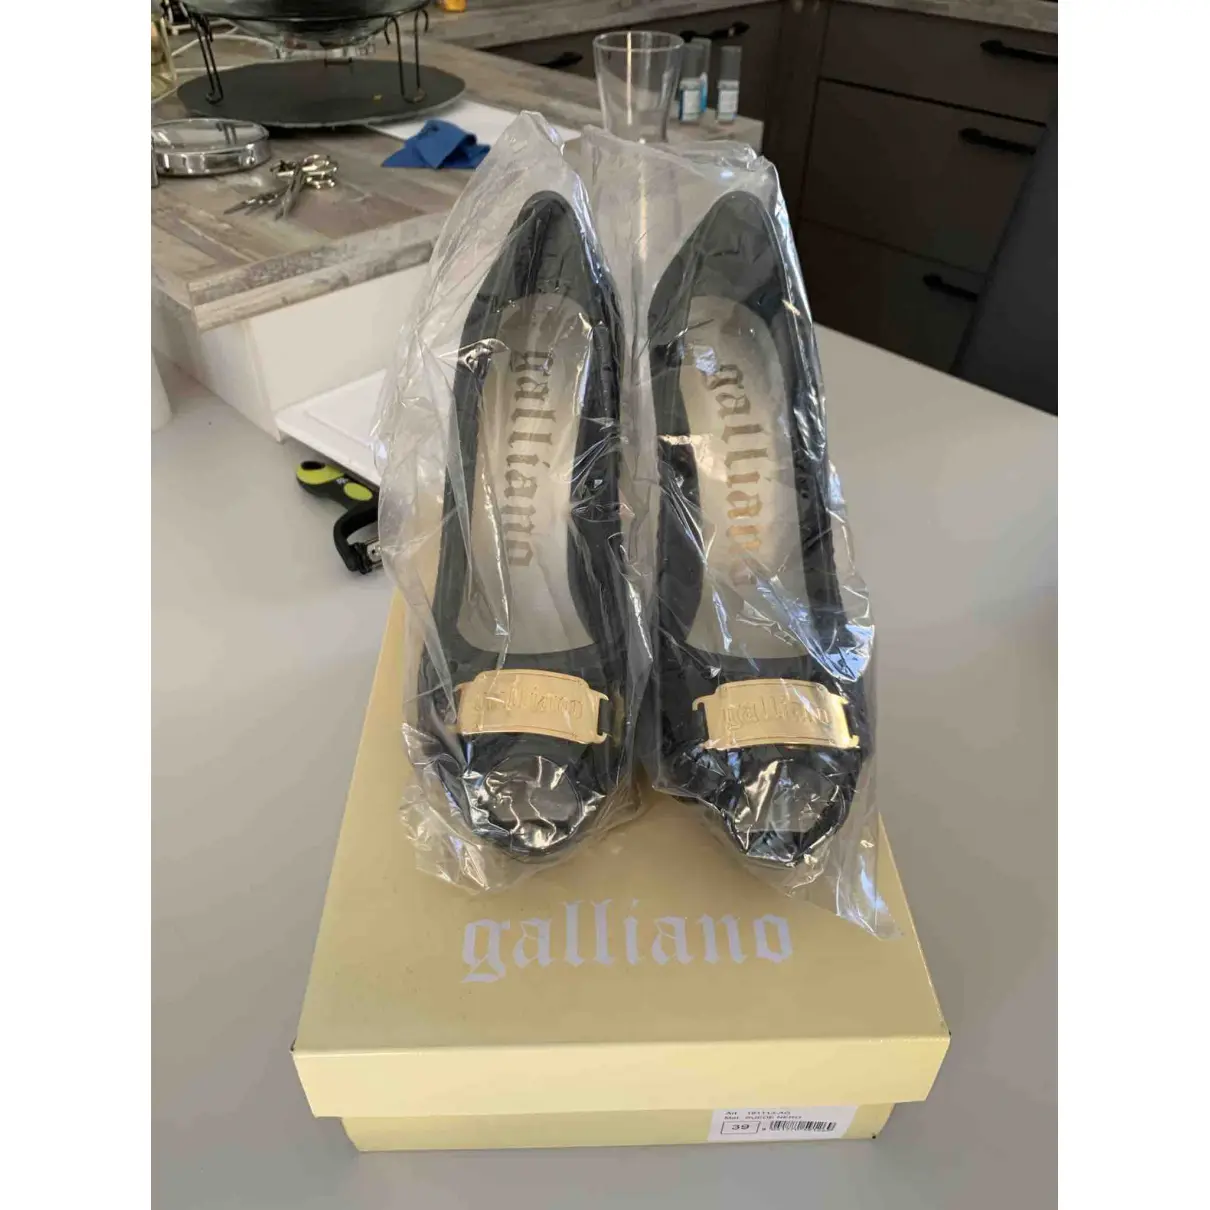 Buy John Galliano Leather sandals online